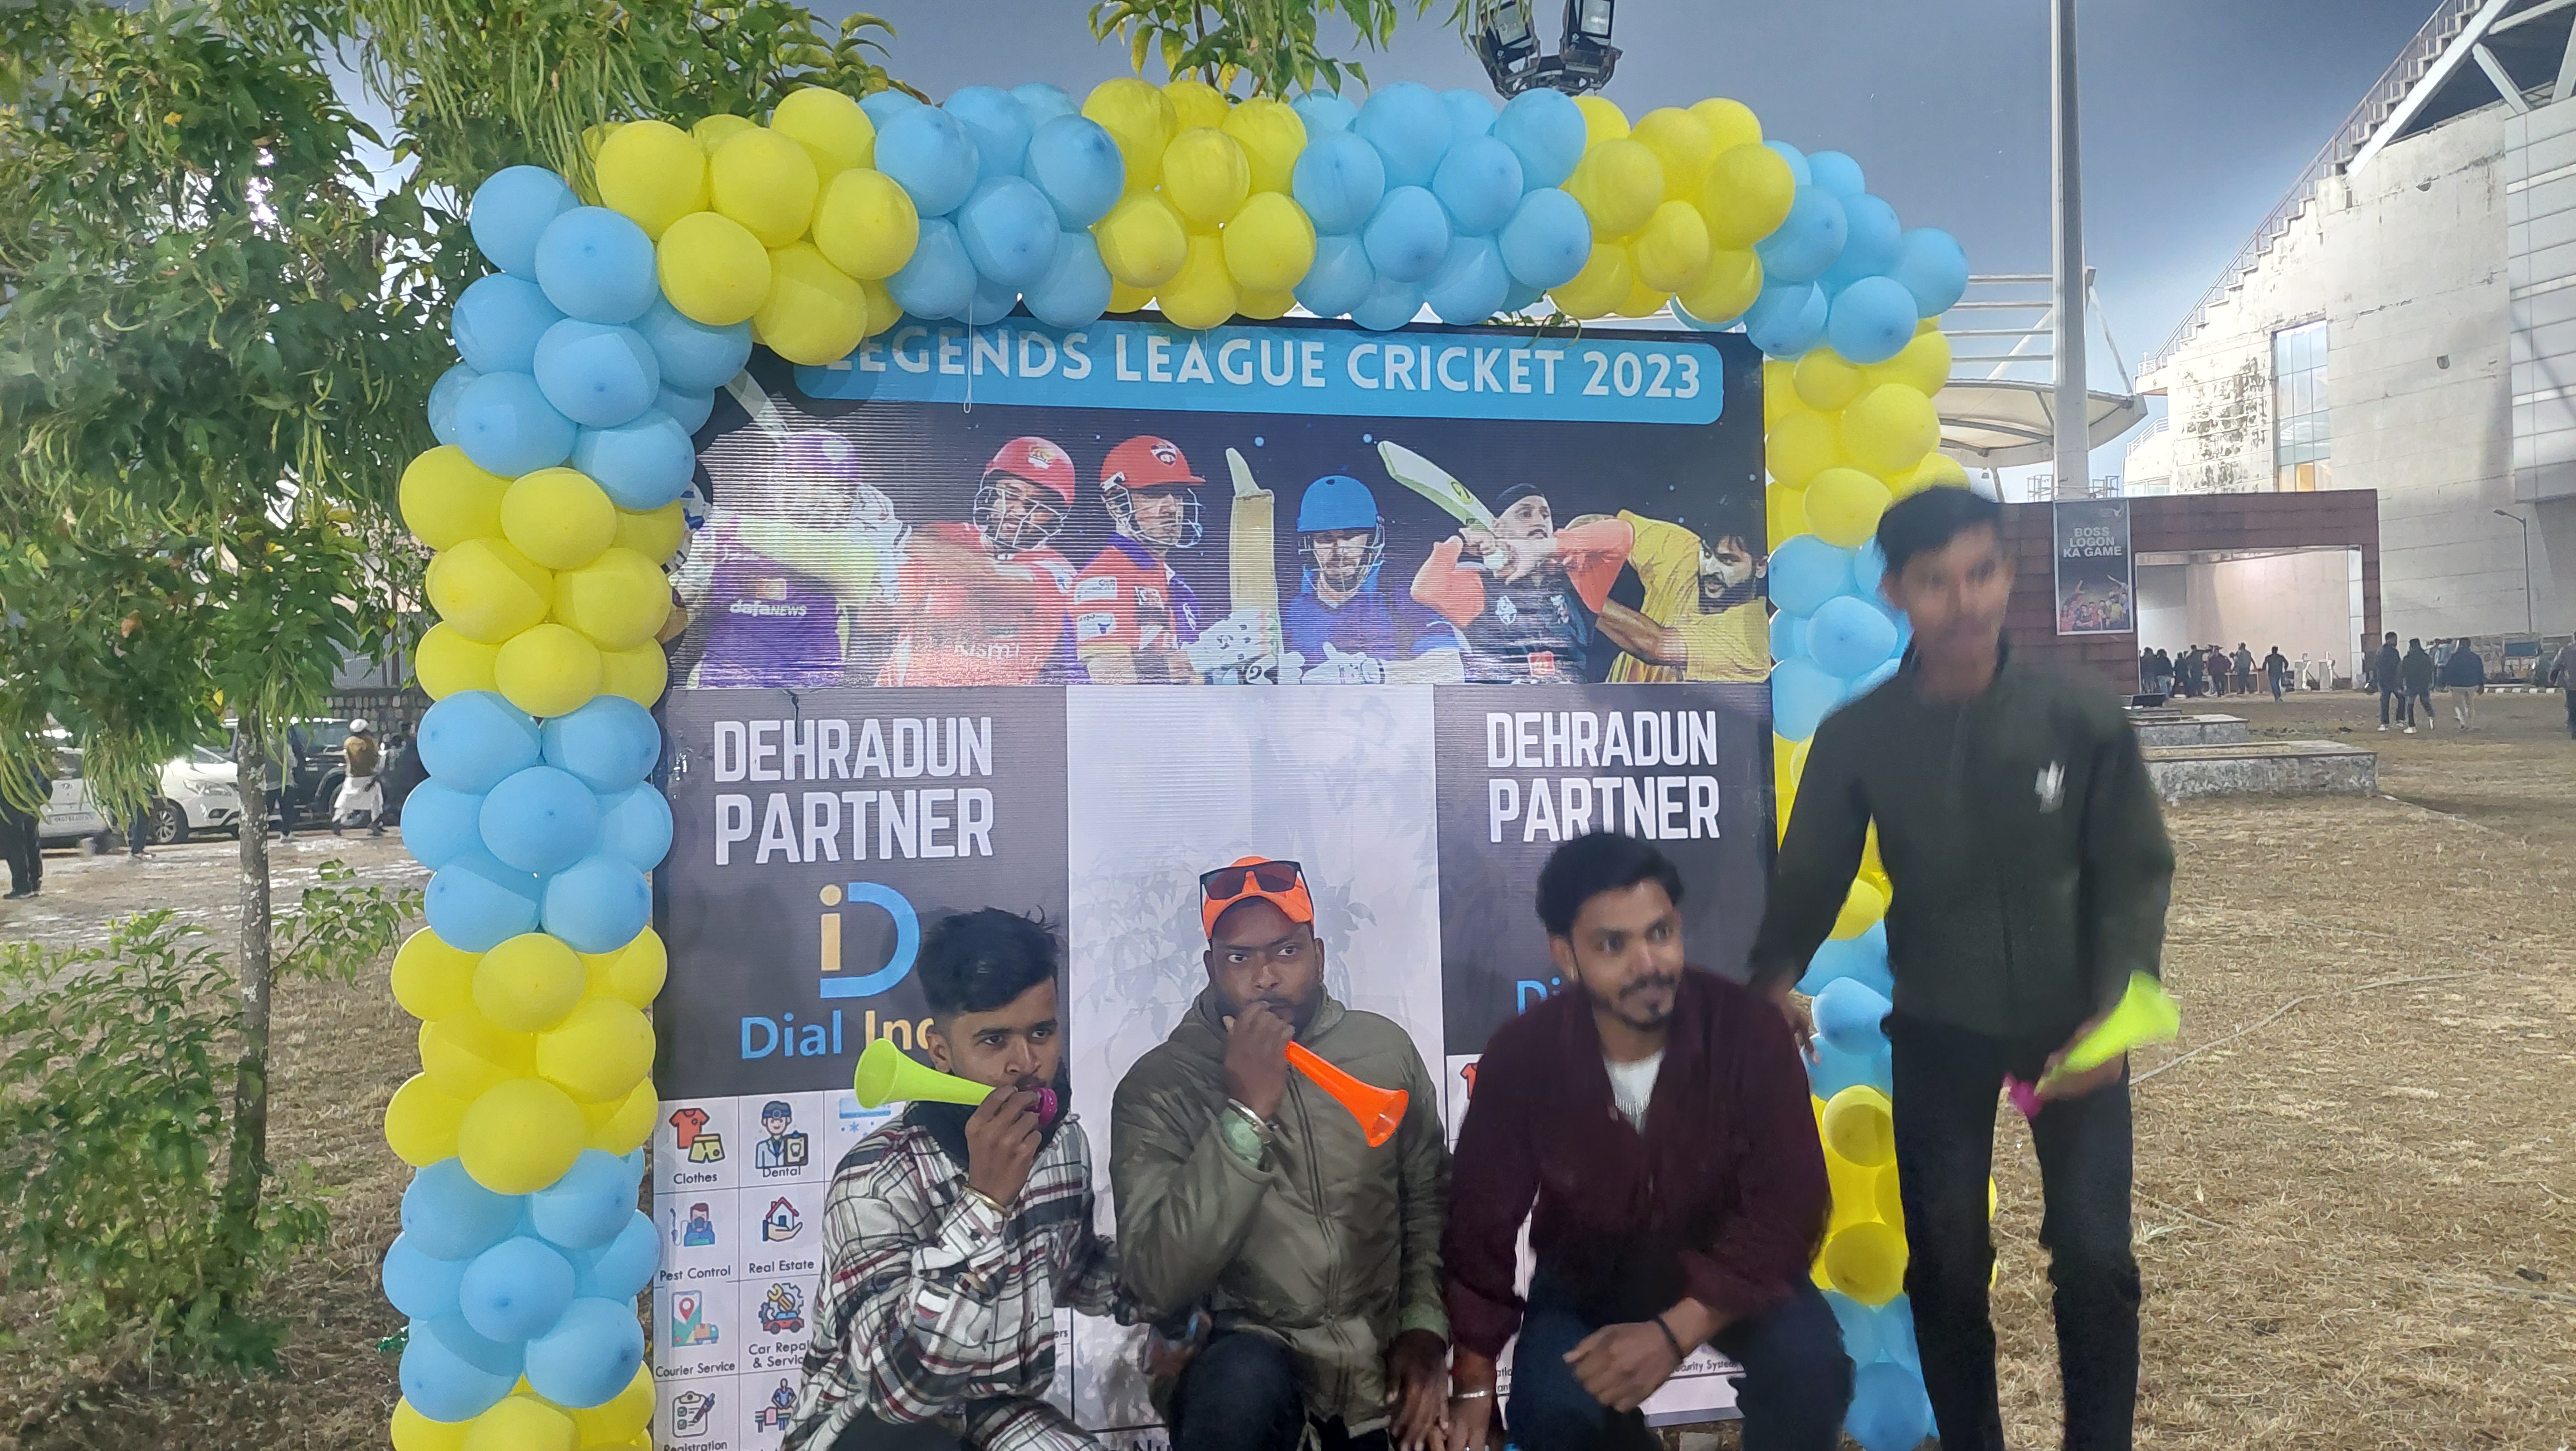 Legends League Cricket T20 Tournament in Dehradun